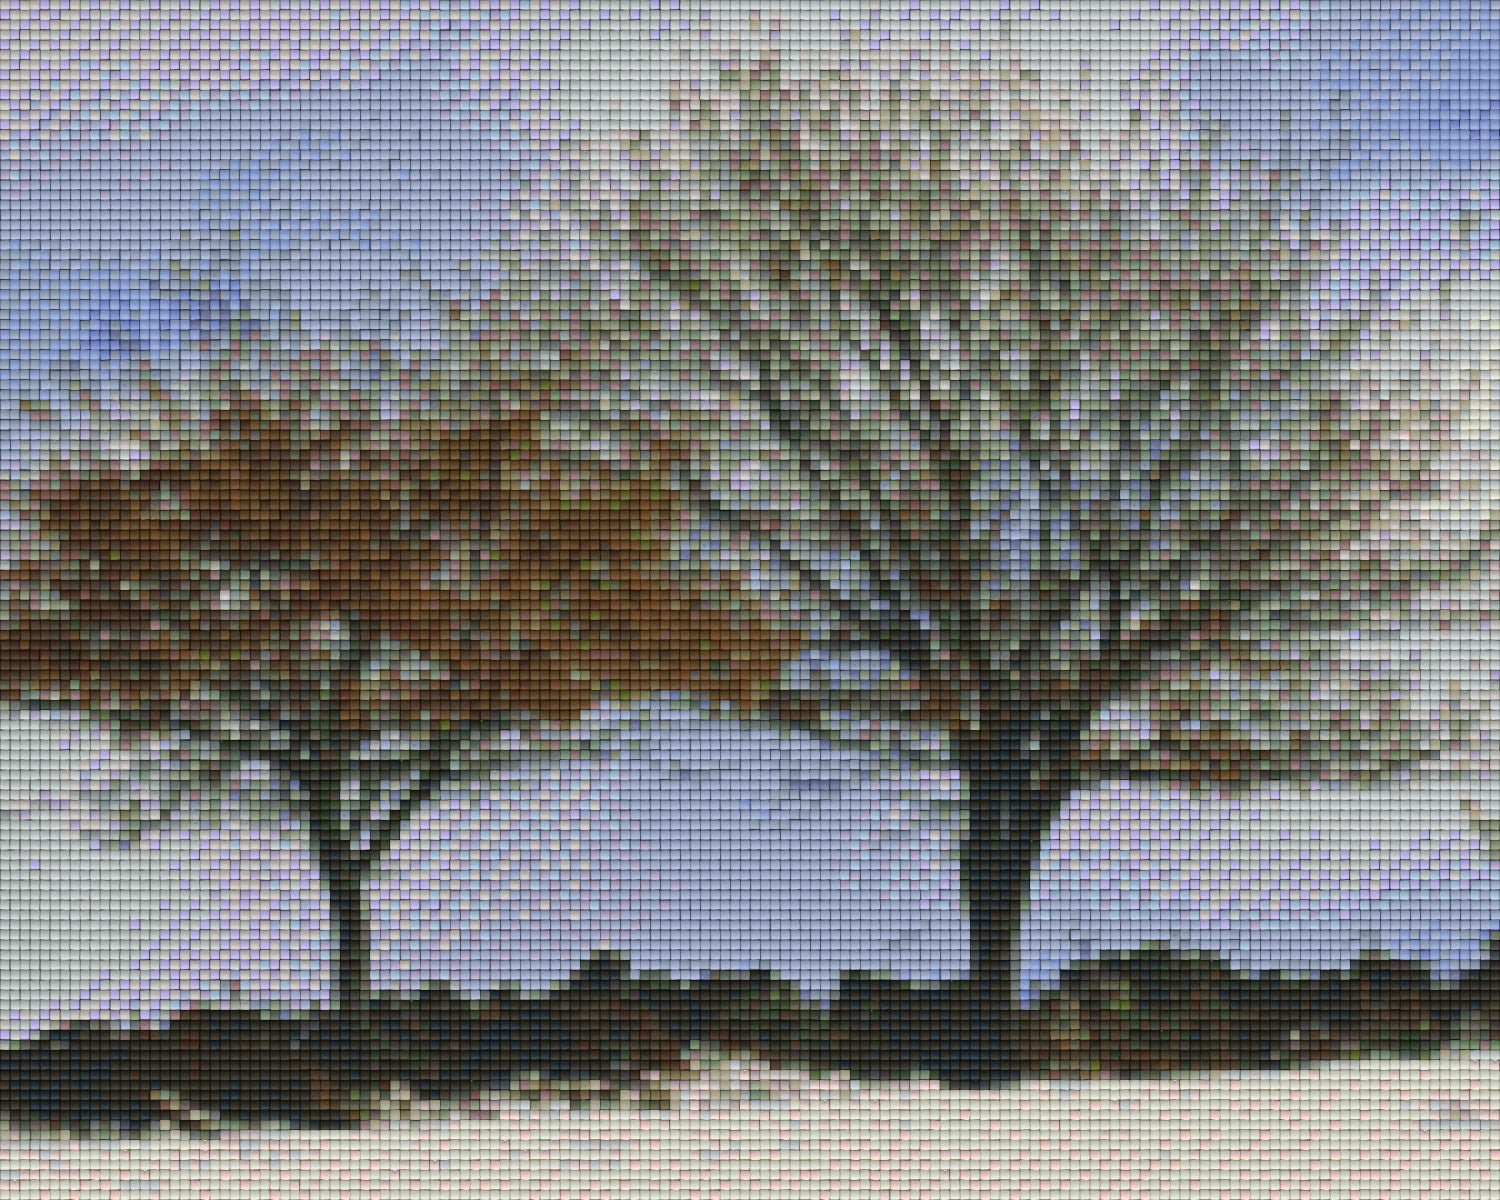 Pixelhobby Klassik Vorlage - Bäume im Schnee